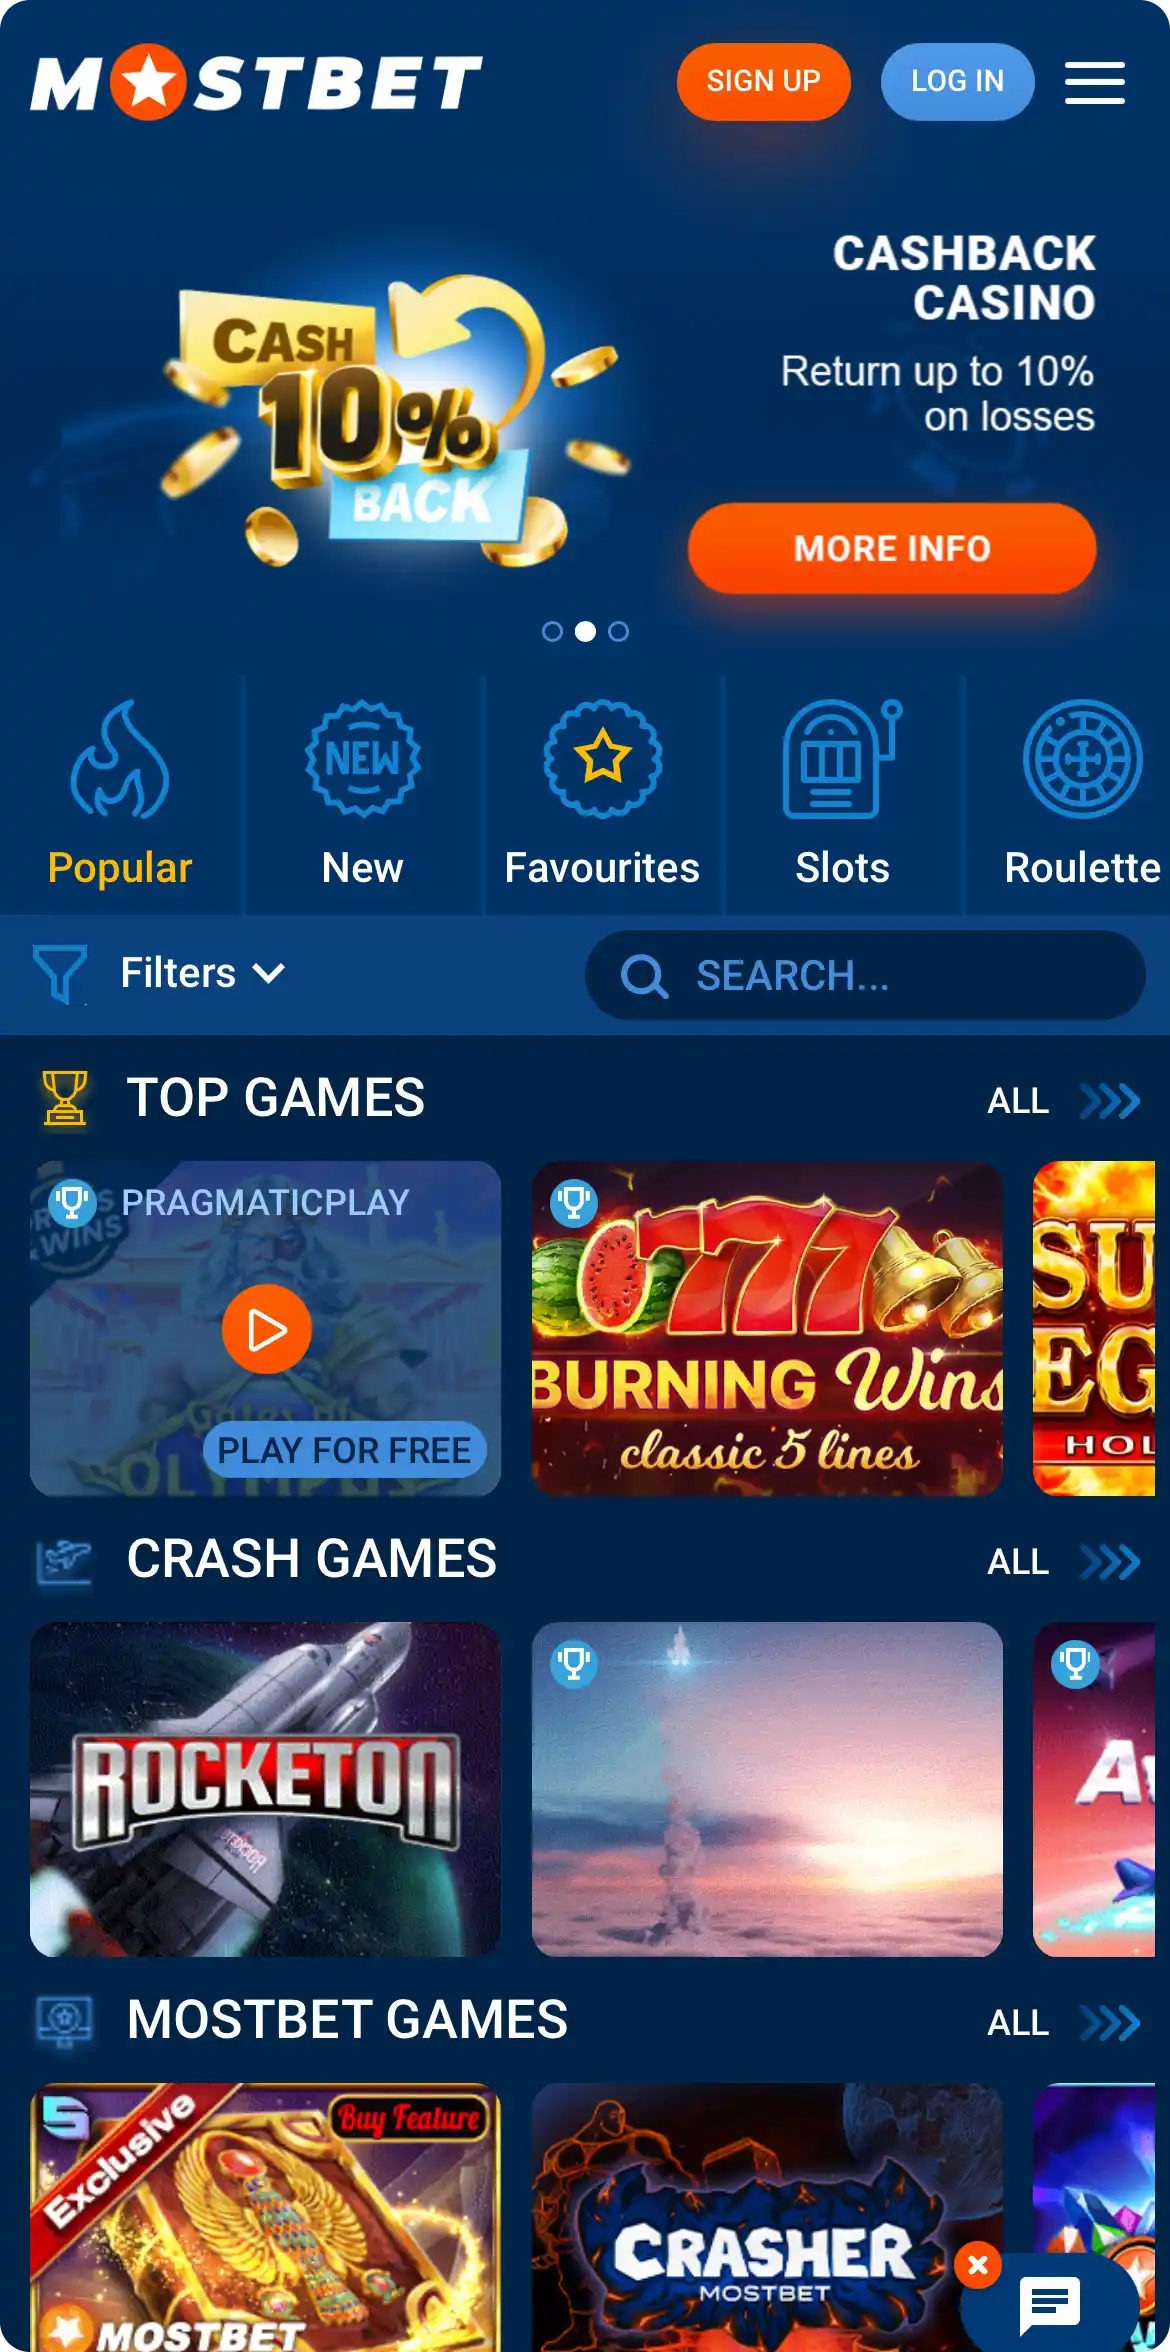 Casino in the Mostbet app